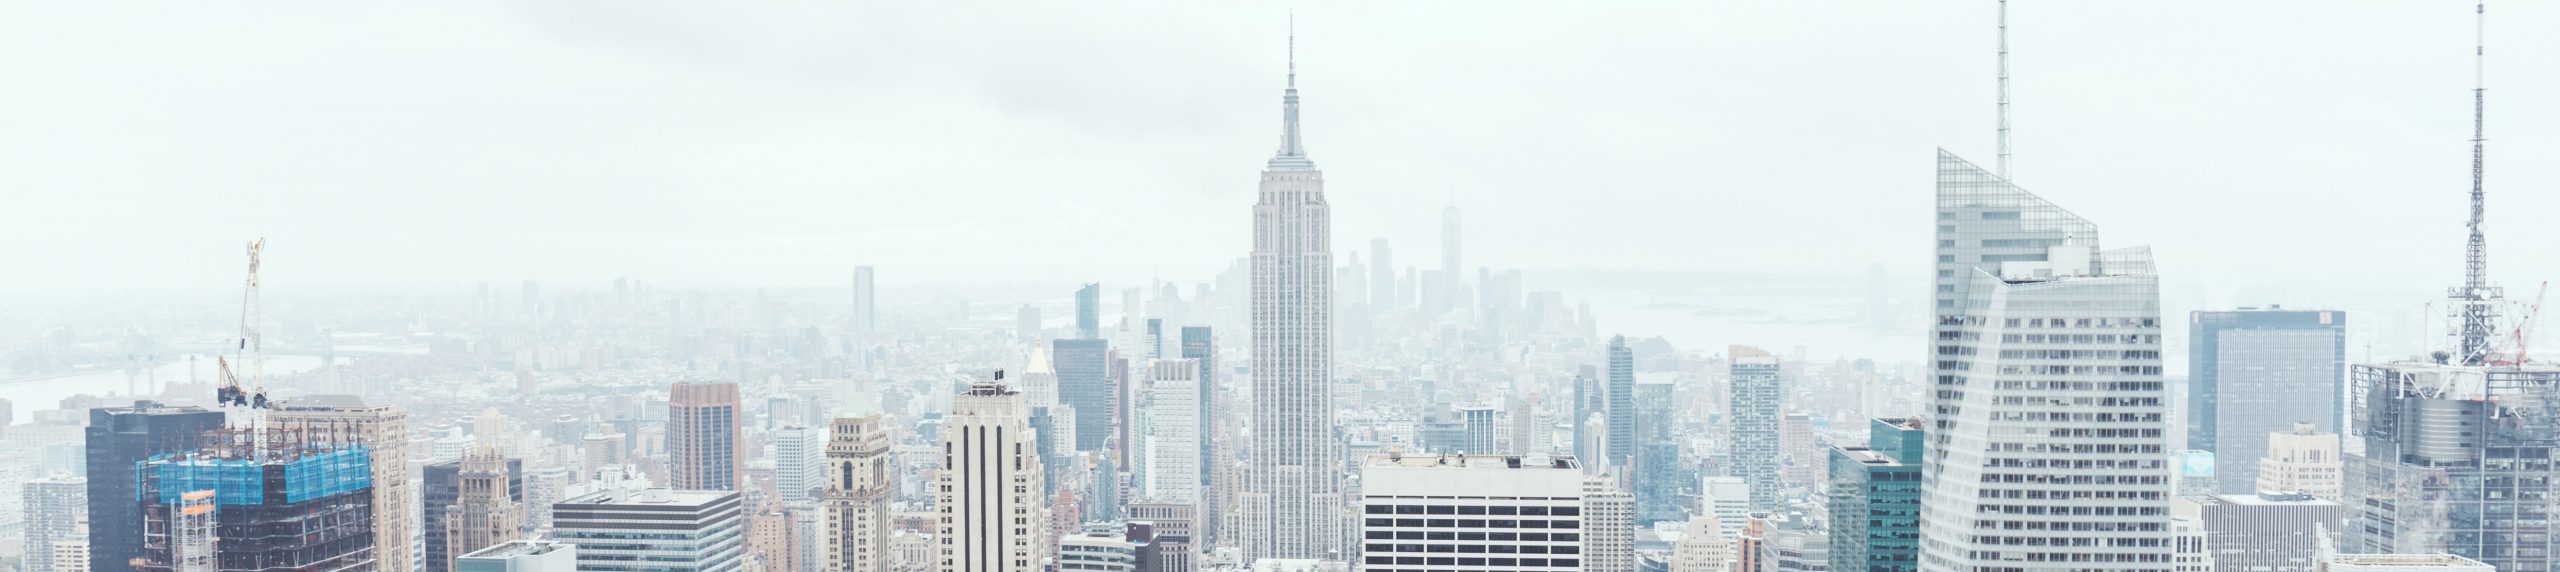 panoramic view of new york city buildings, usa